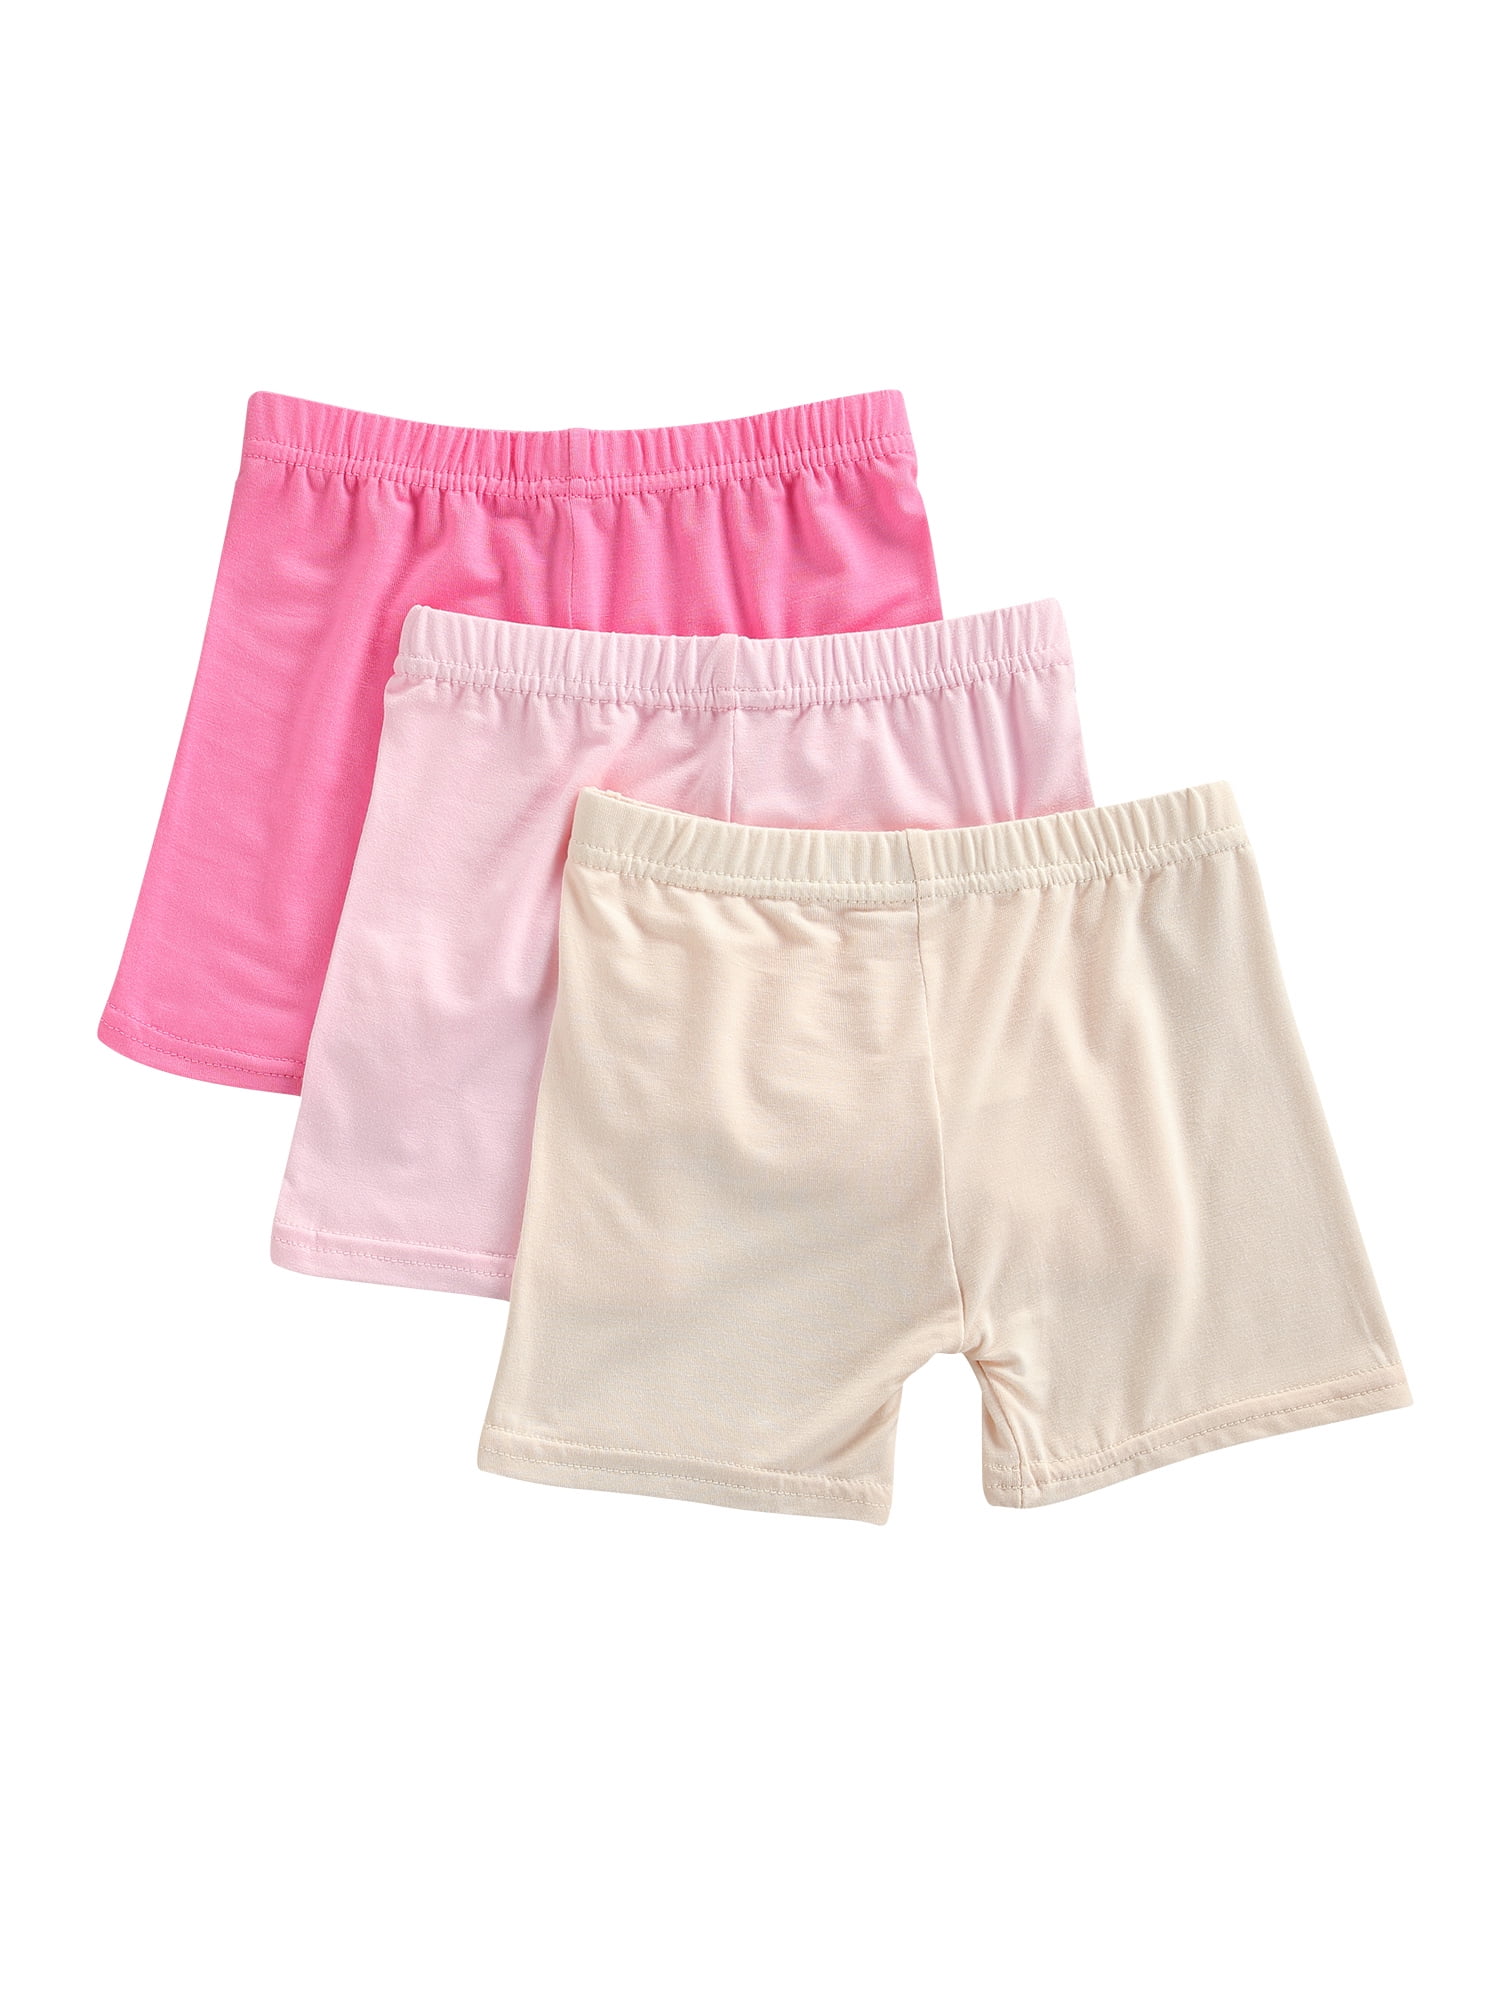 3 Pack Kids Girls Safety Shorts Leggings Soft Cotton Summer Safety